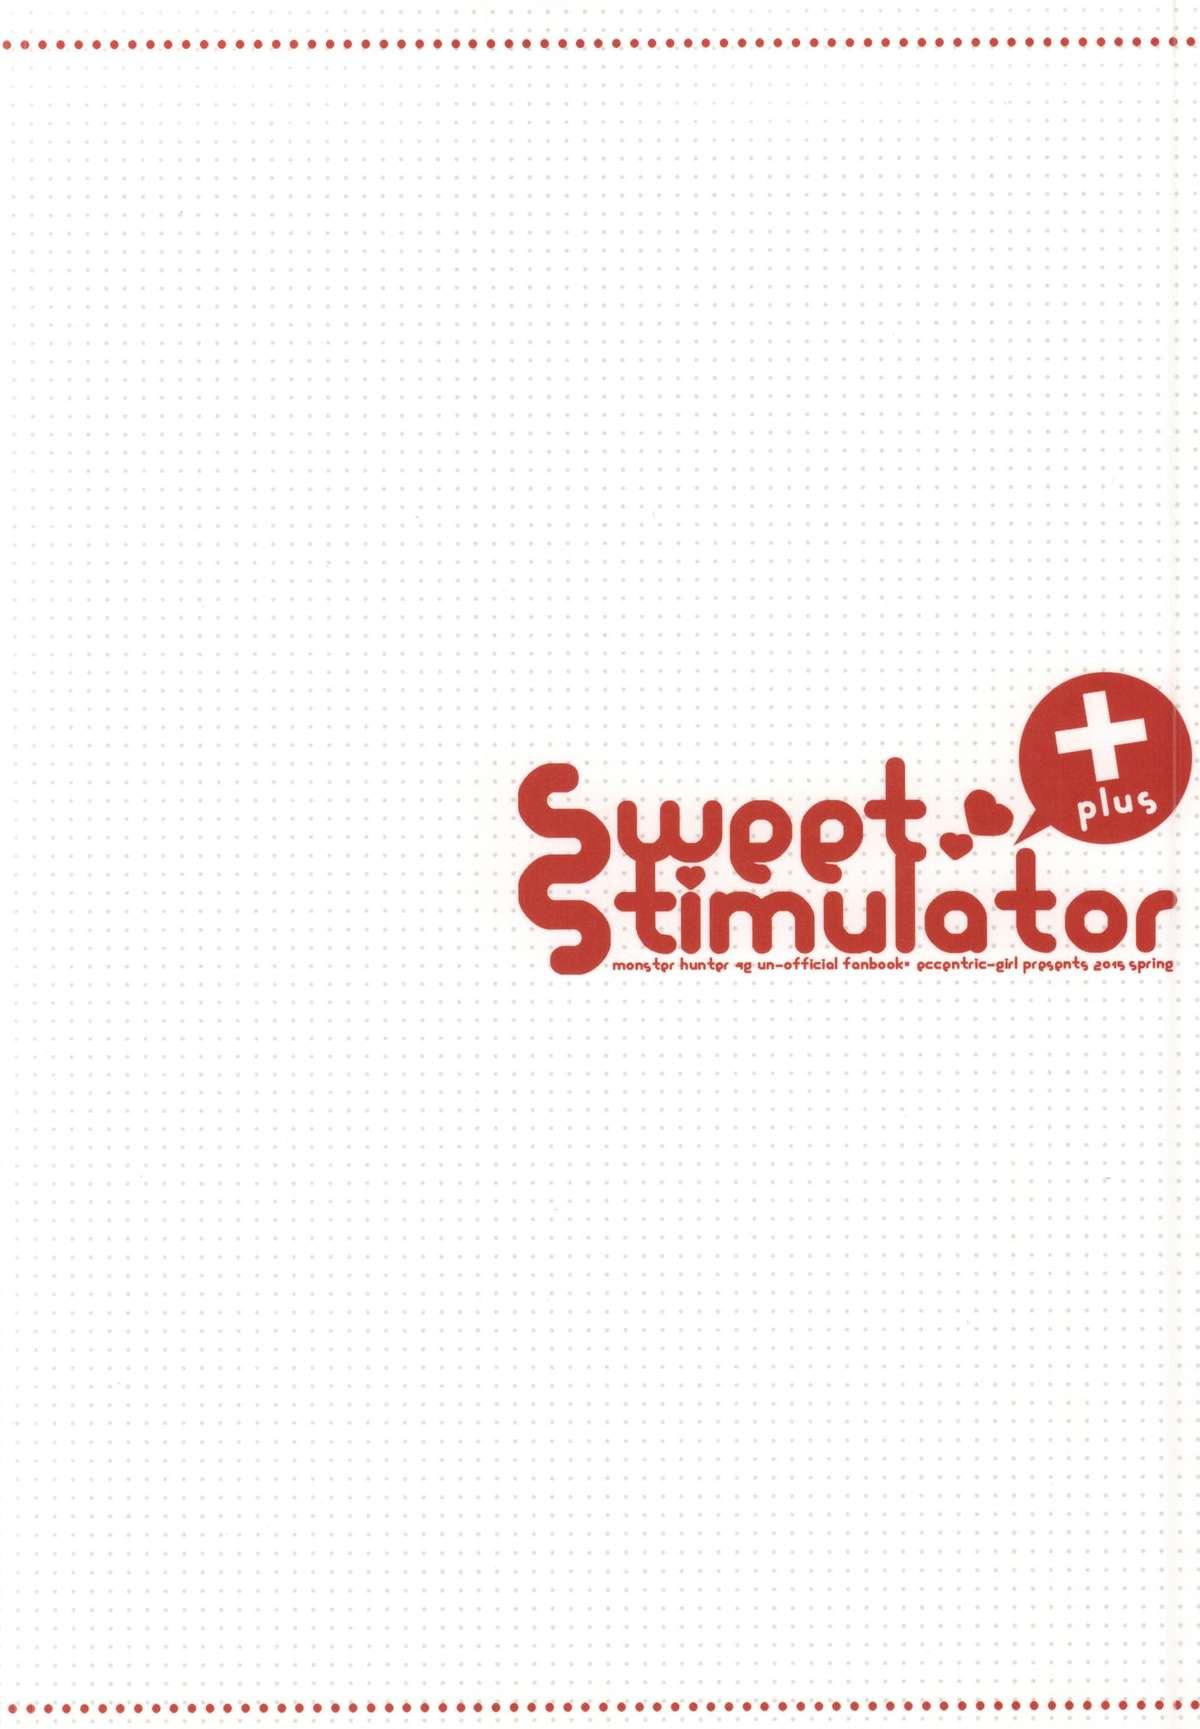 Sweet Stimulator plus 19